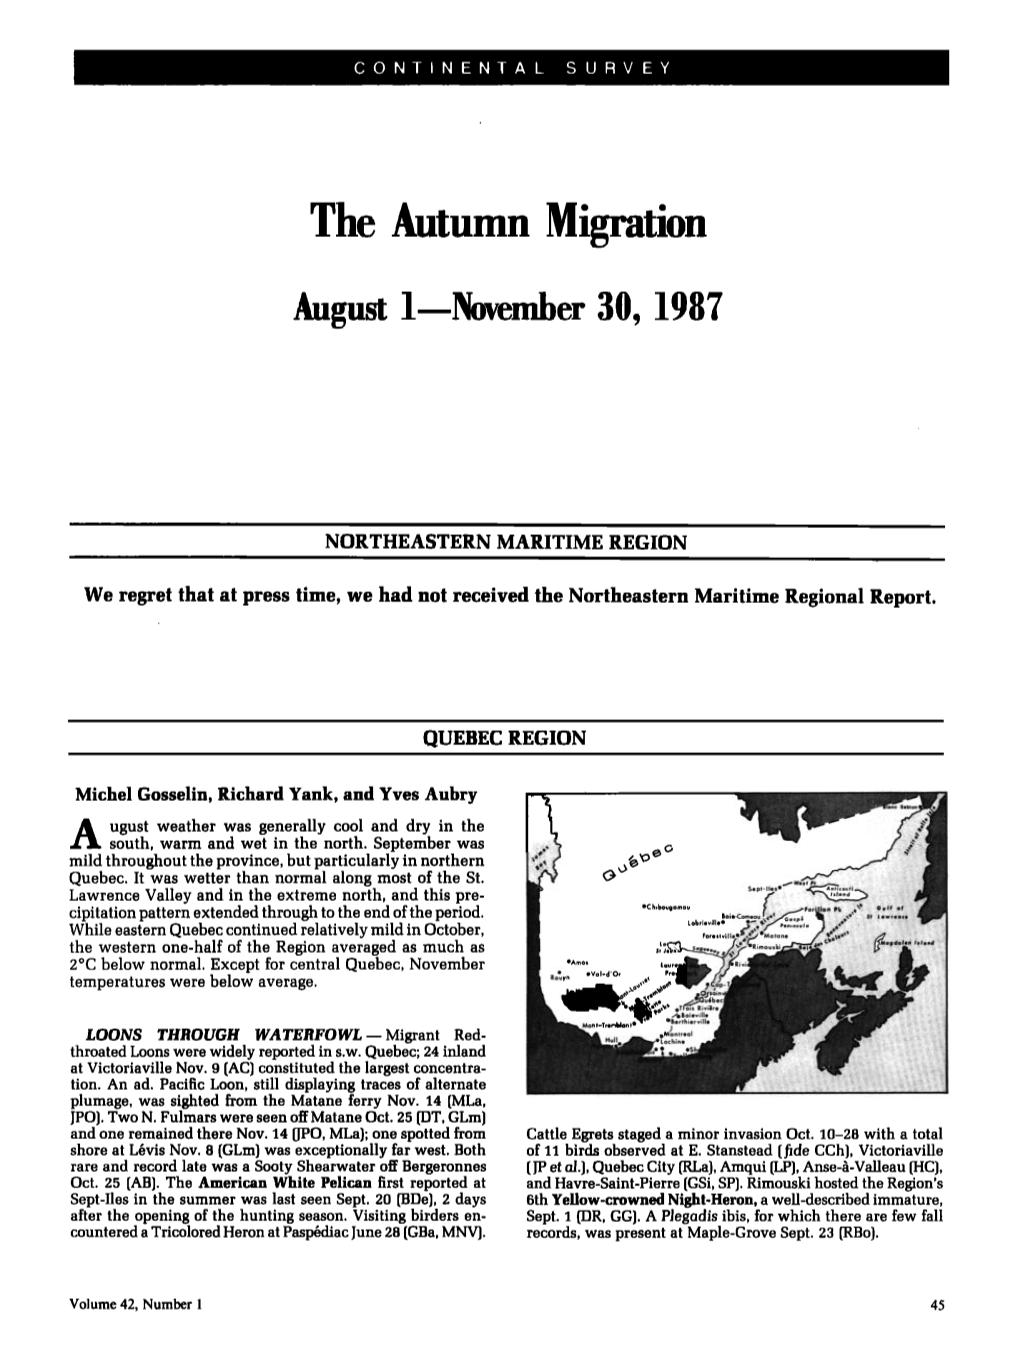 The Autumn Migration August 1-November 30, 1987